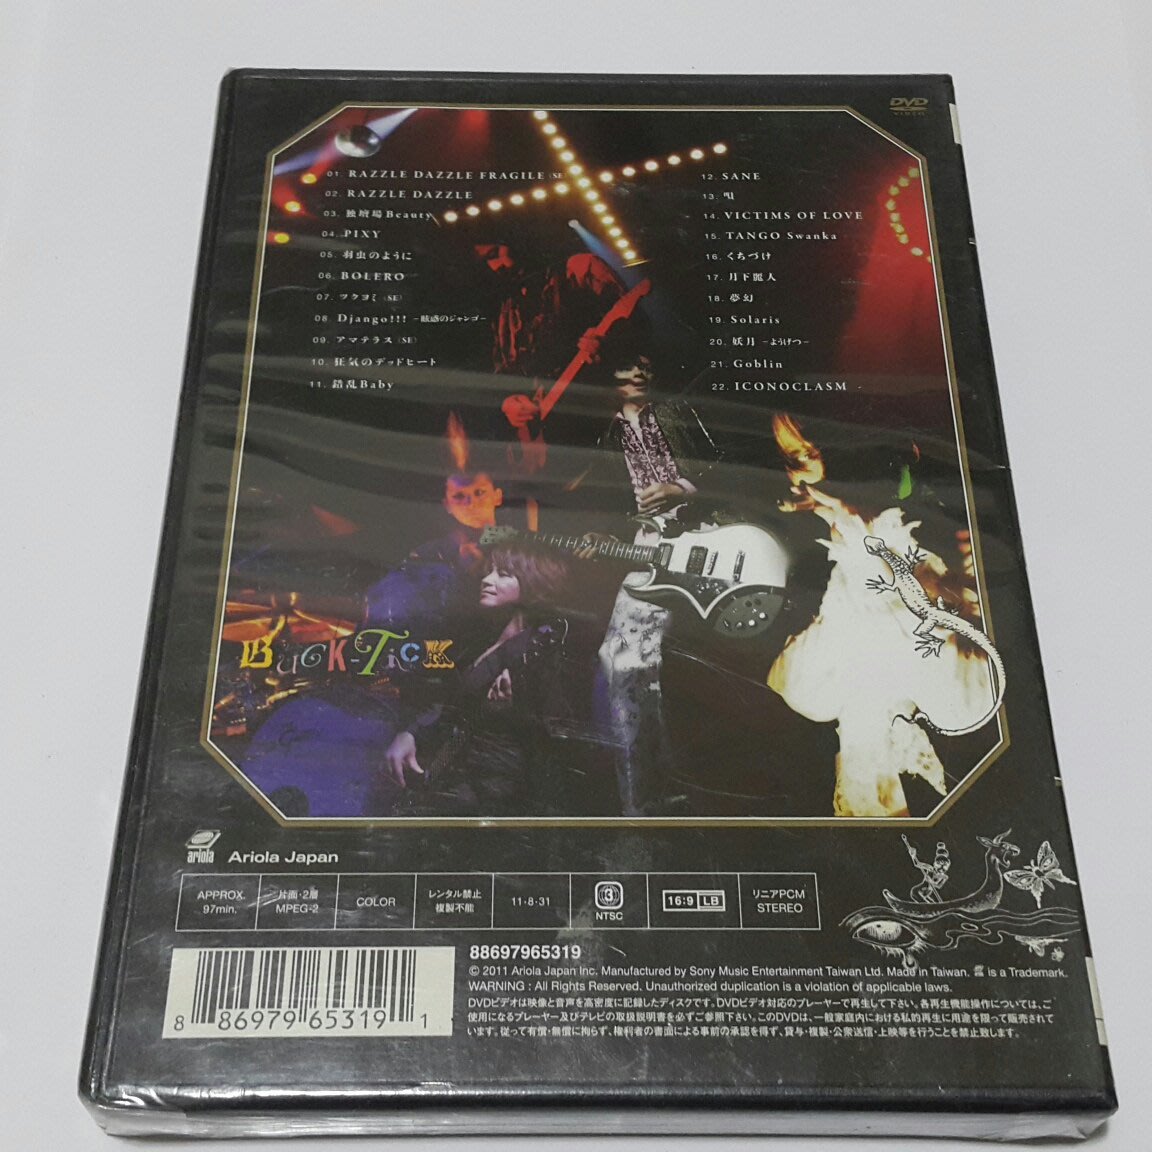 E1 RAZZLE DAZZLE(初回生産限定盤)(DVD付)BUCK-TICK 邦楽 CD 本・音楽・ゲーム 新年の贈り物